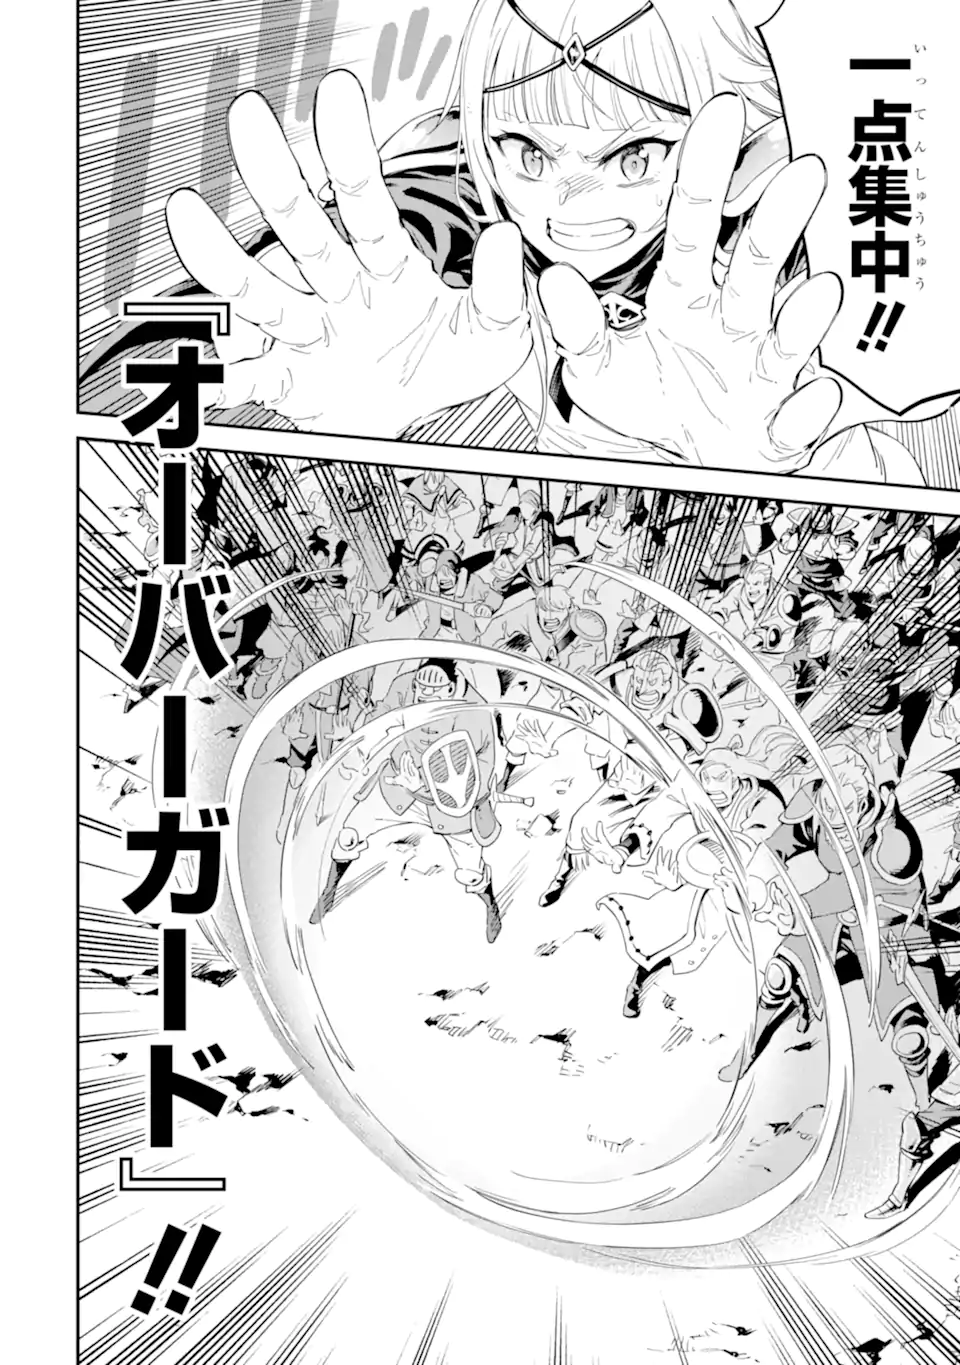 Isekai Kenja no Tensei Musou ~Geemu no Chishiki de Isekai Saikyou~ - Chapter 36.4 - Page 6